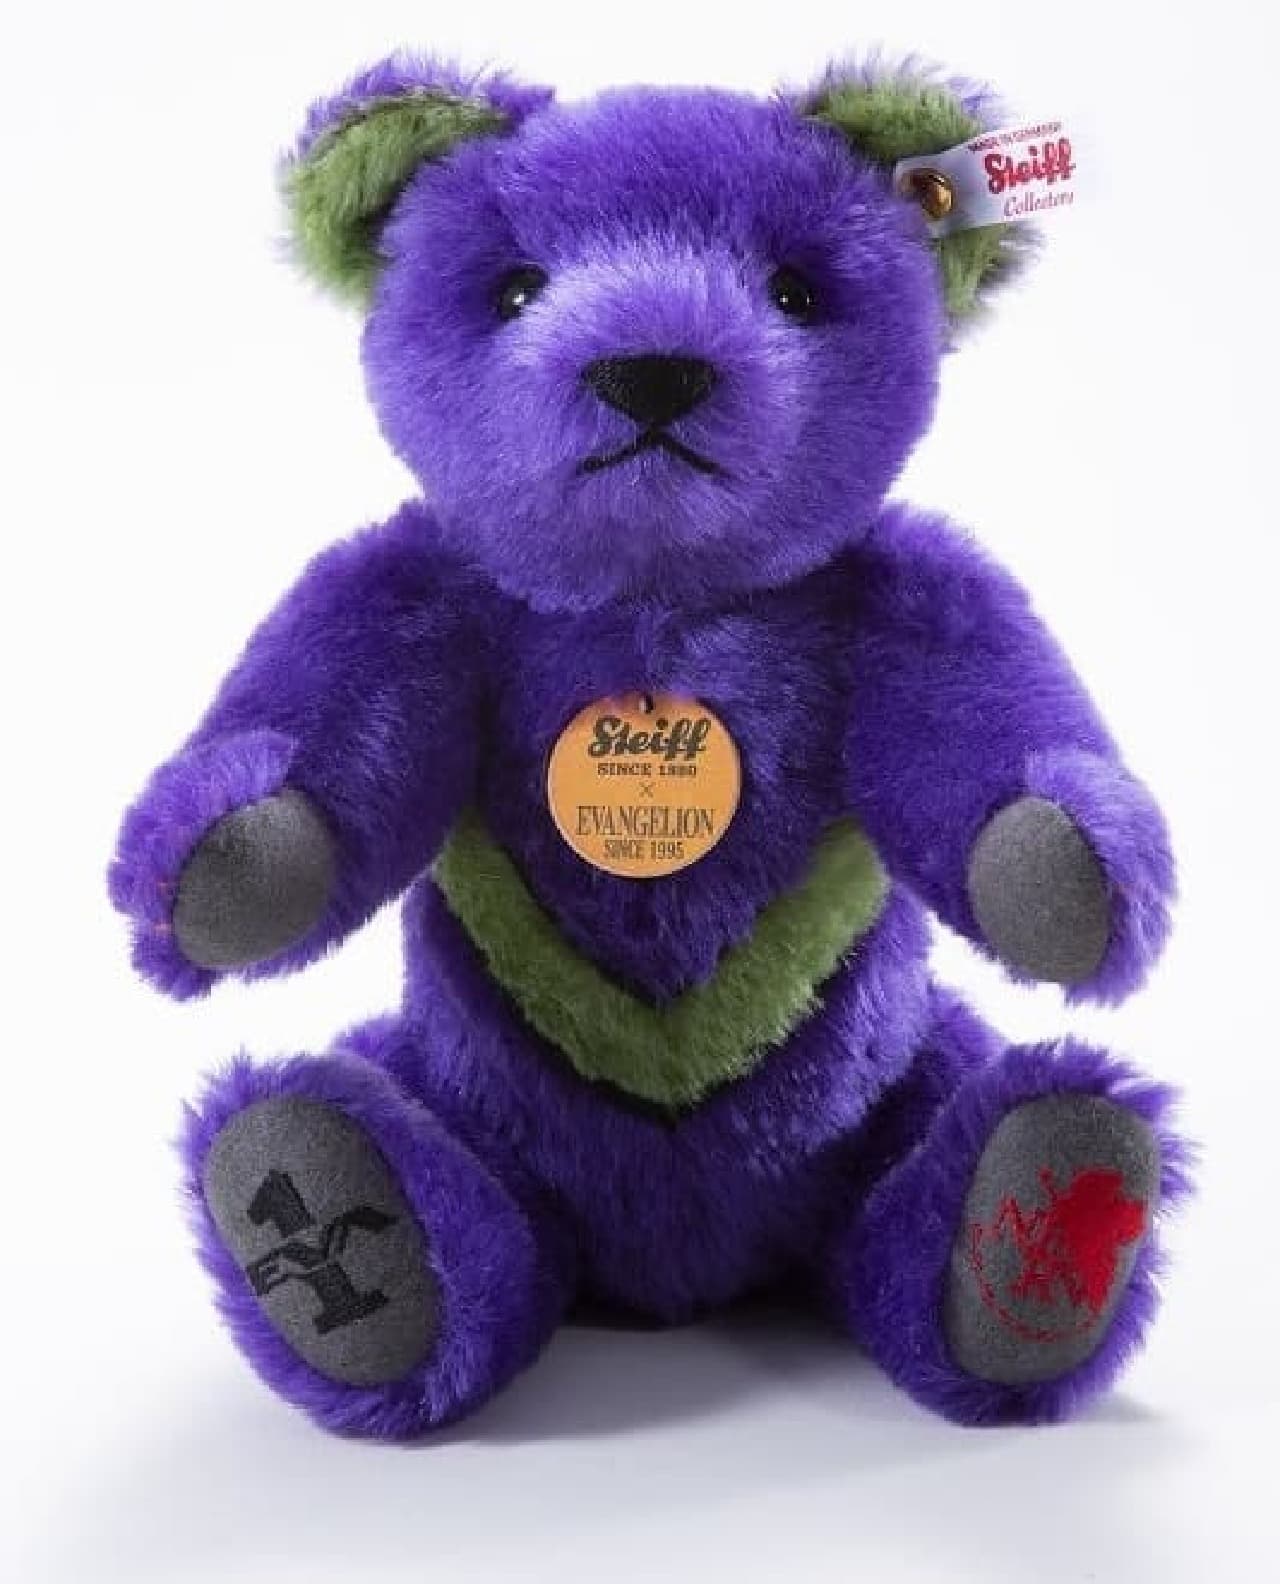 Teddy bear "Evangelion x Steiff 2020"